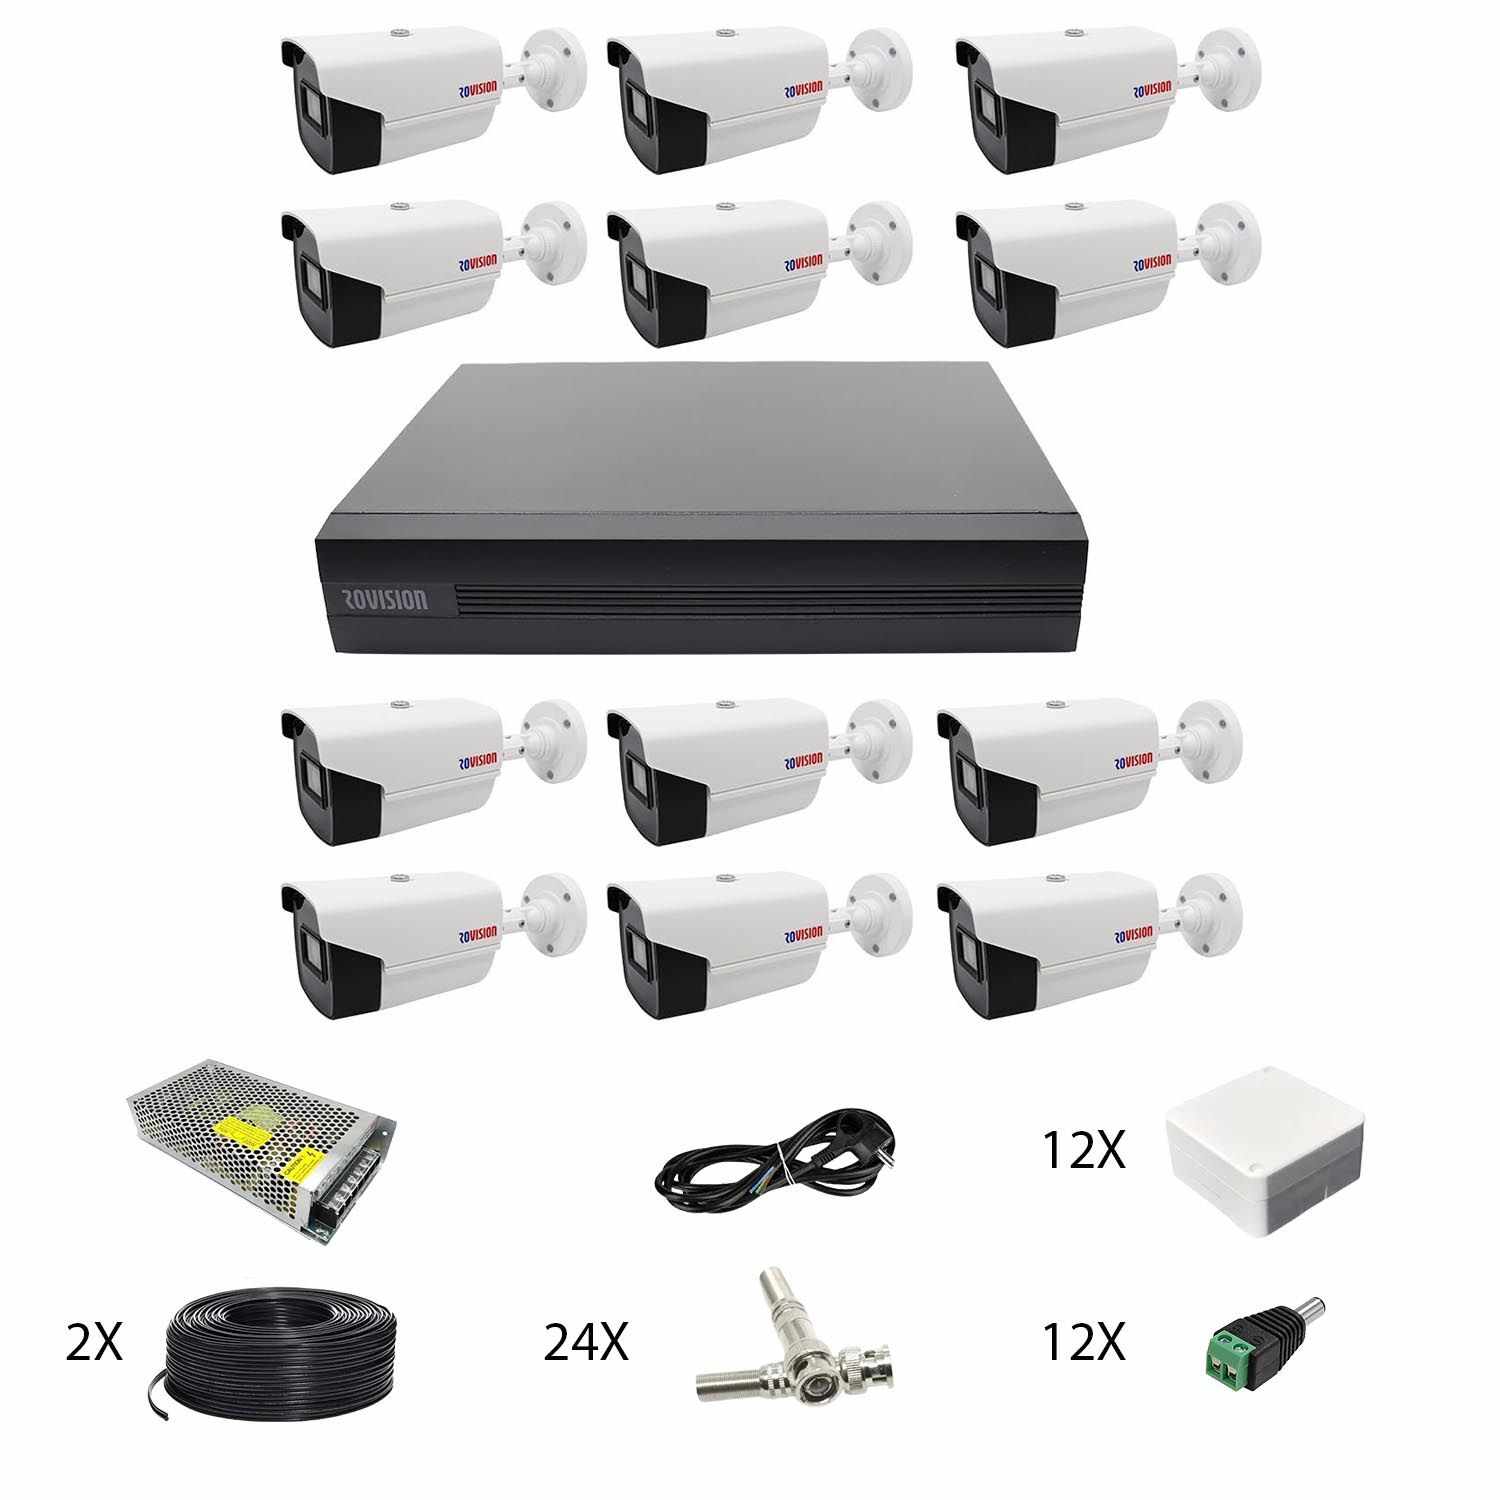 Sistem de supraveghere video 12 camere Rovision oem Hikvision 2MP full hd, IR 40m, DVR 16 canale, accesorii